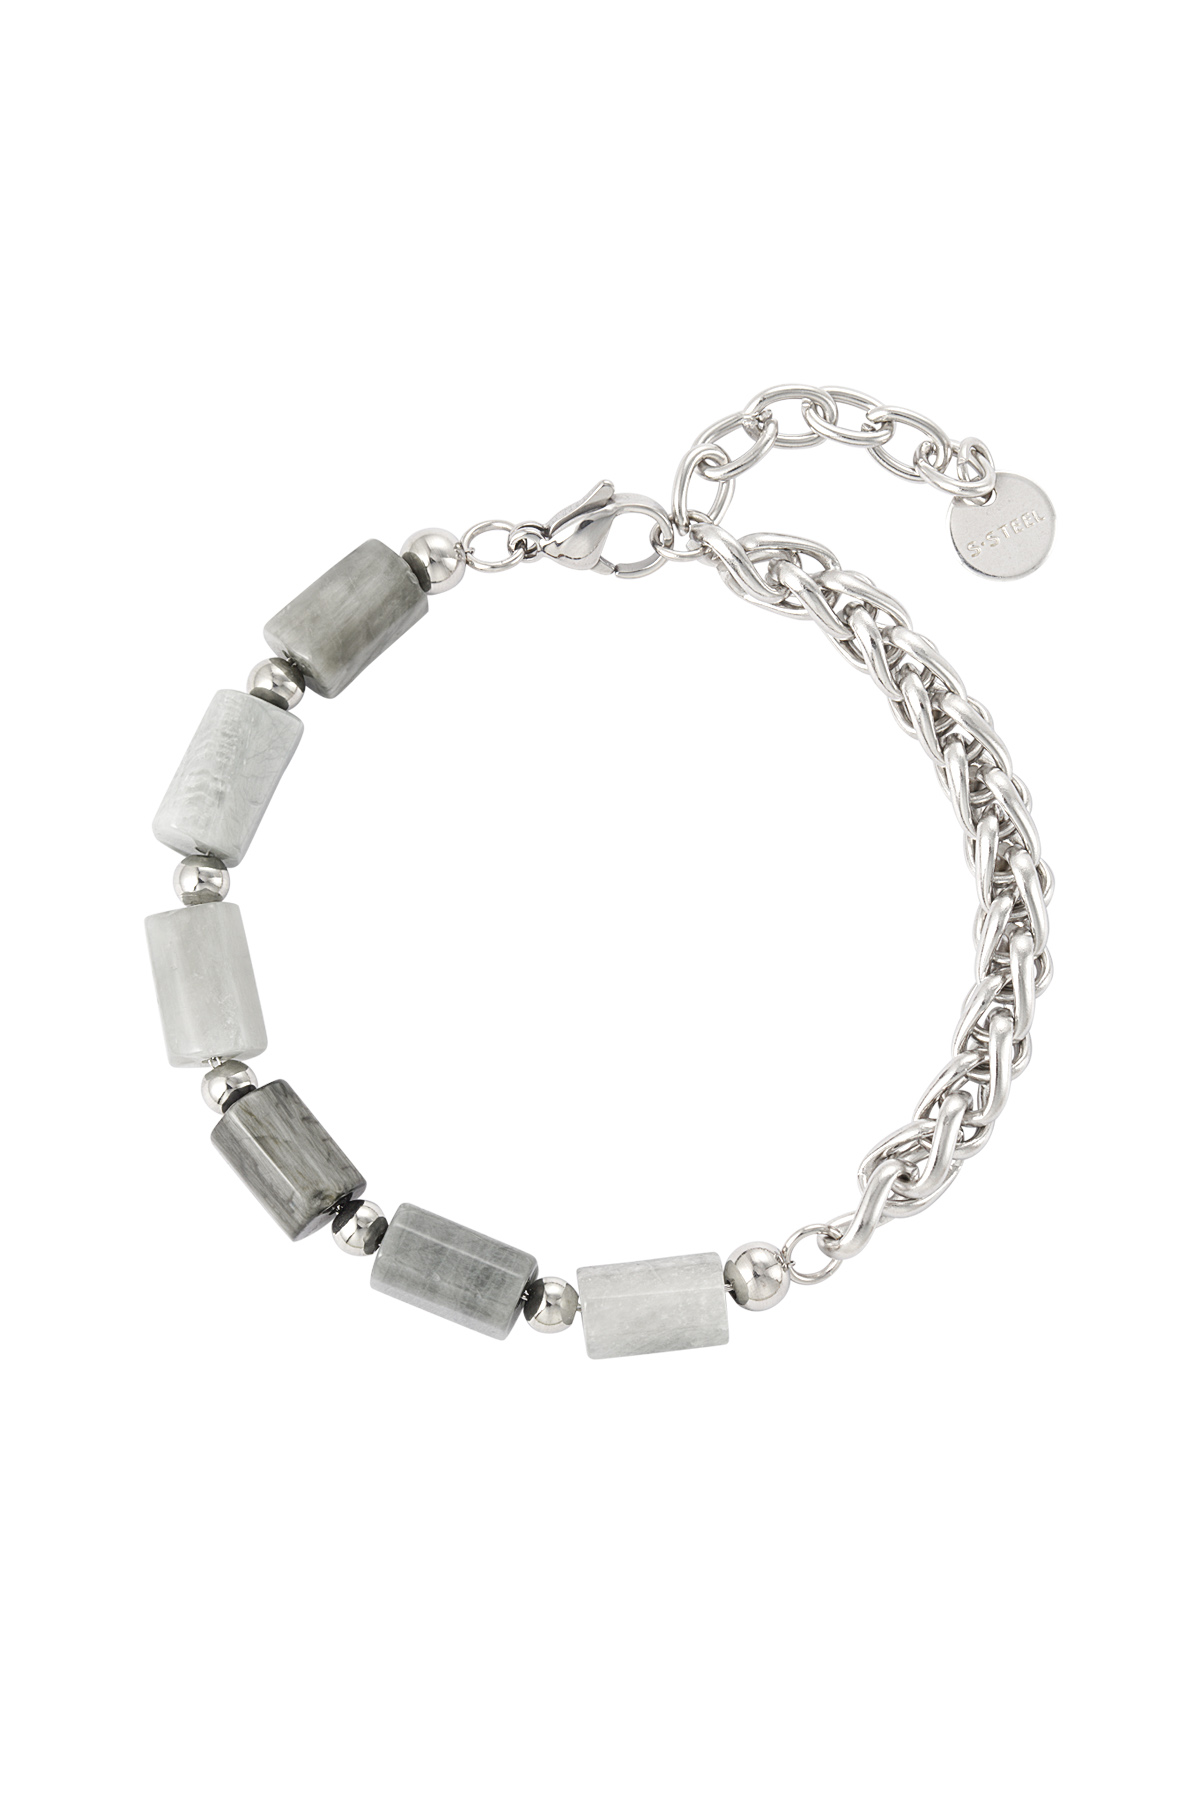 Half chained half charms bracelet - dark gray